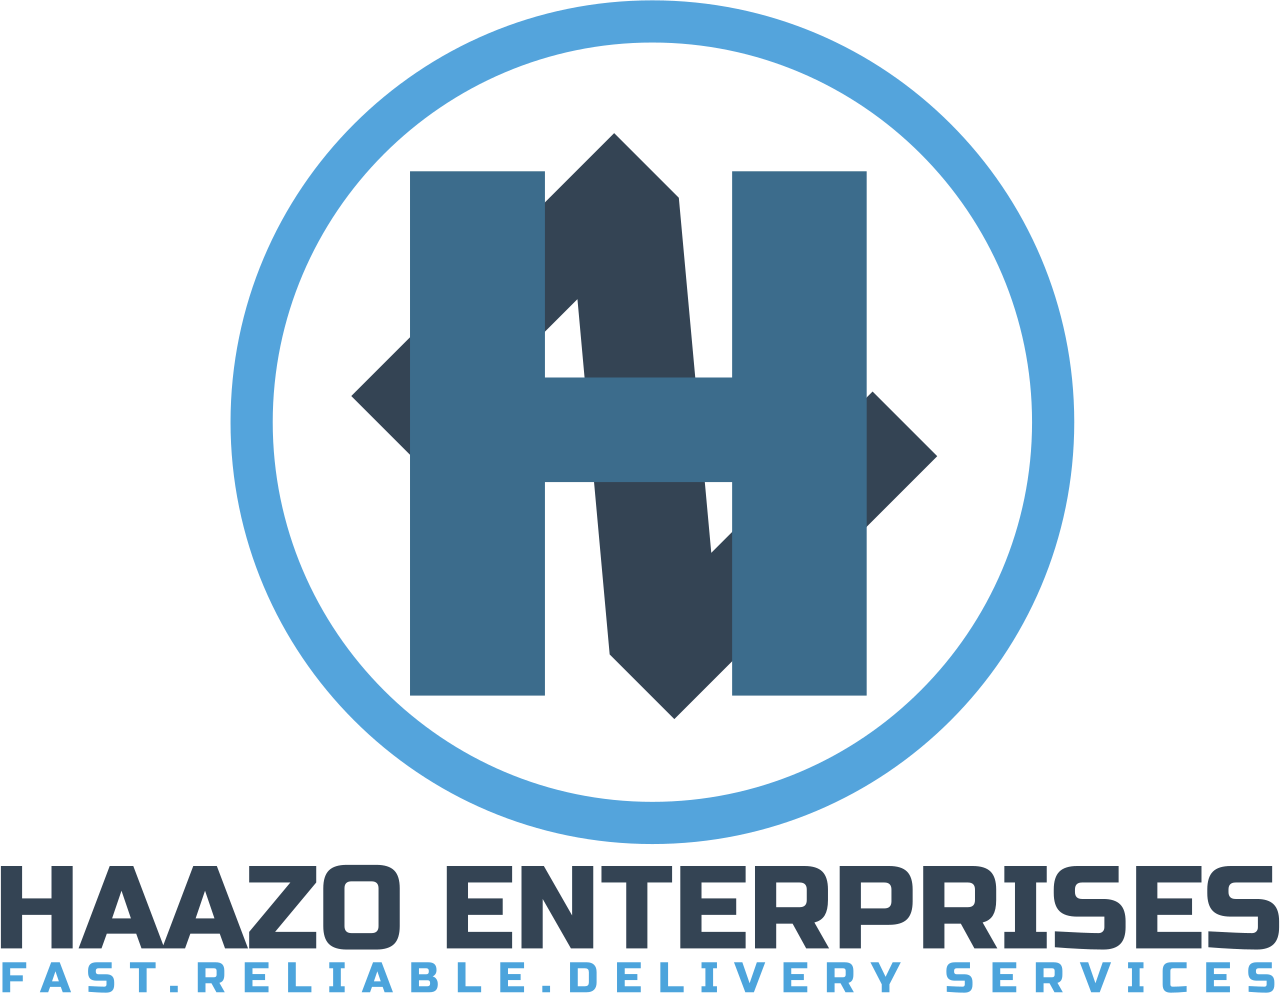 HAAZO ENTERPRISES's logo